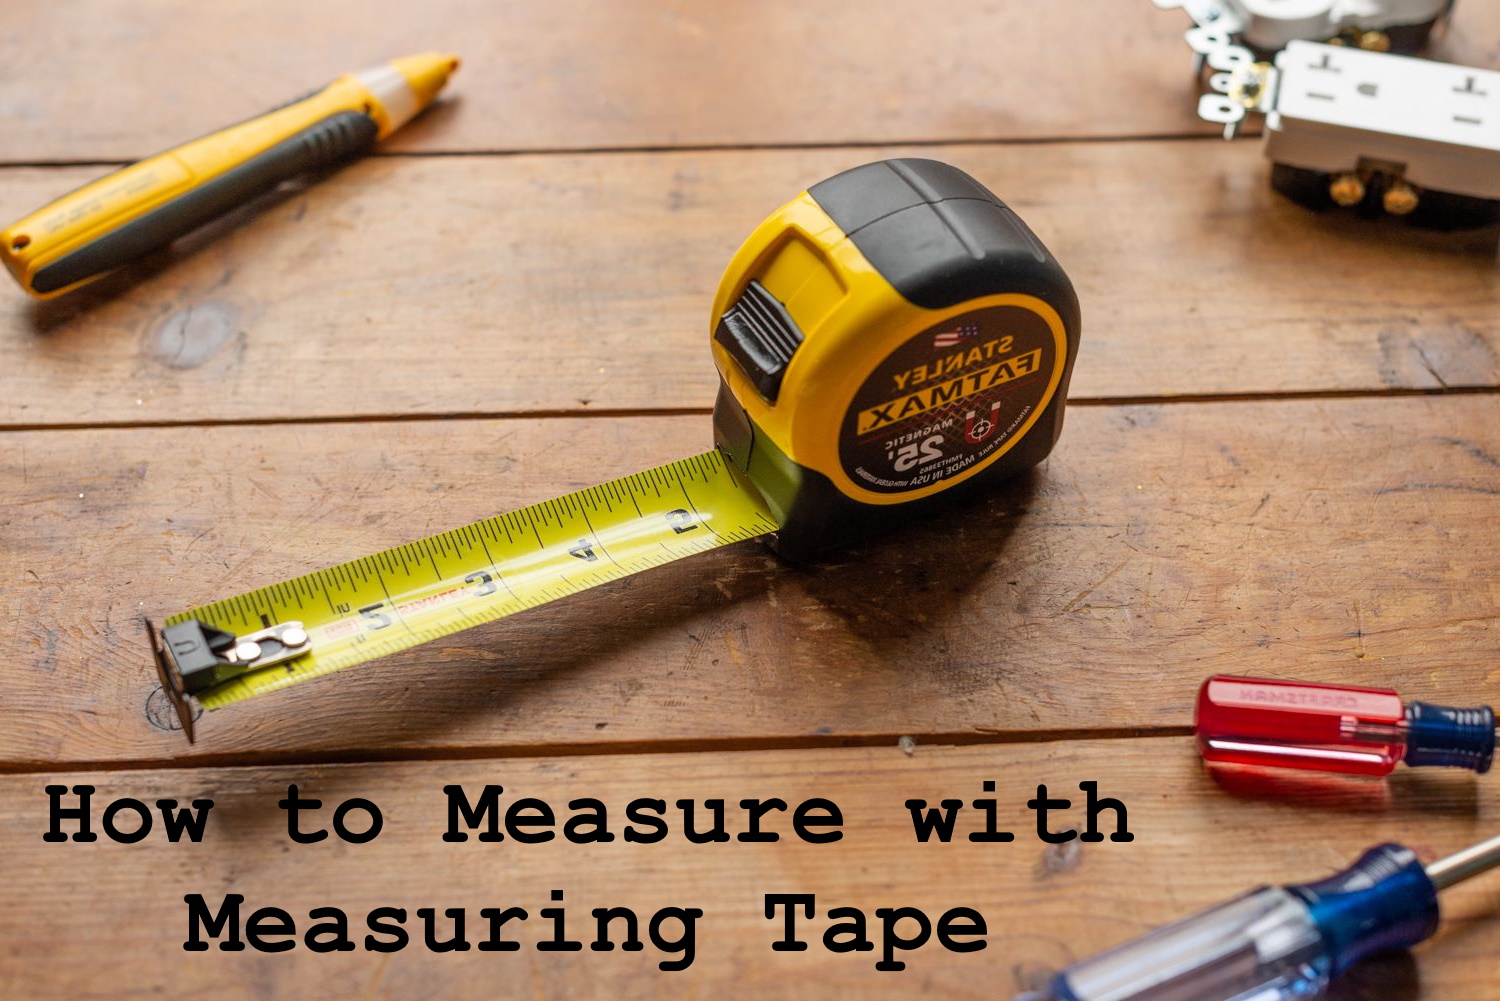 Read a METRIC tape measure 